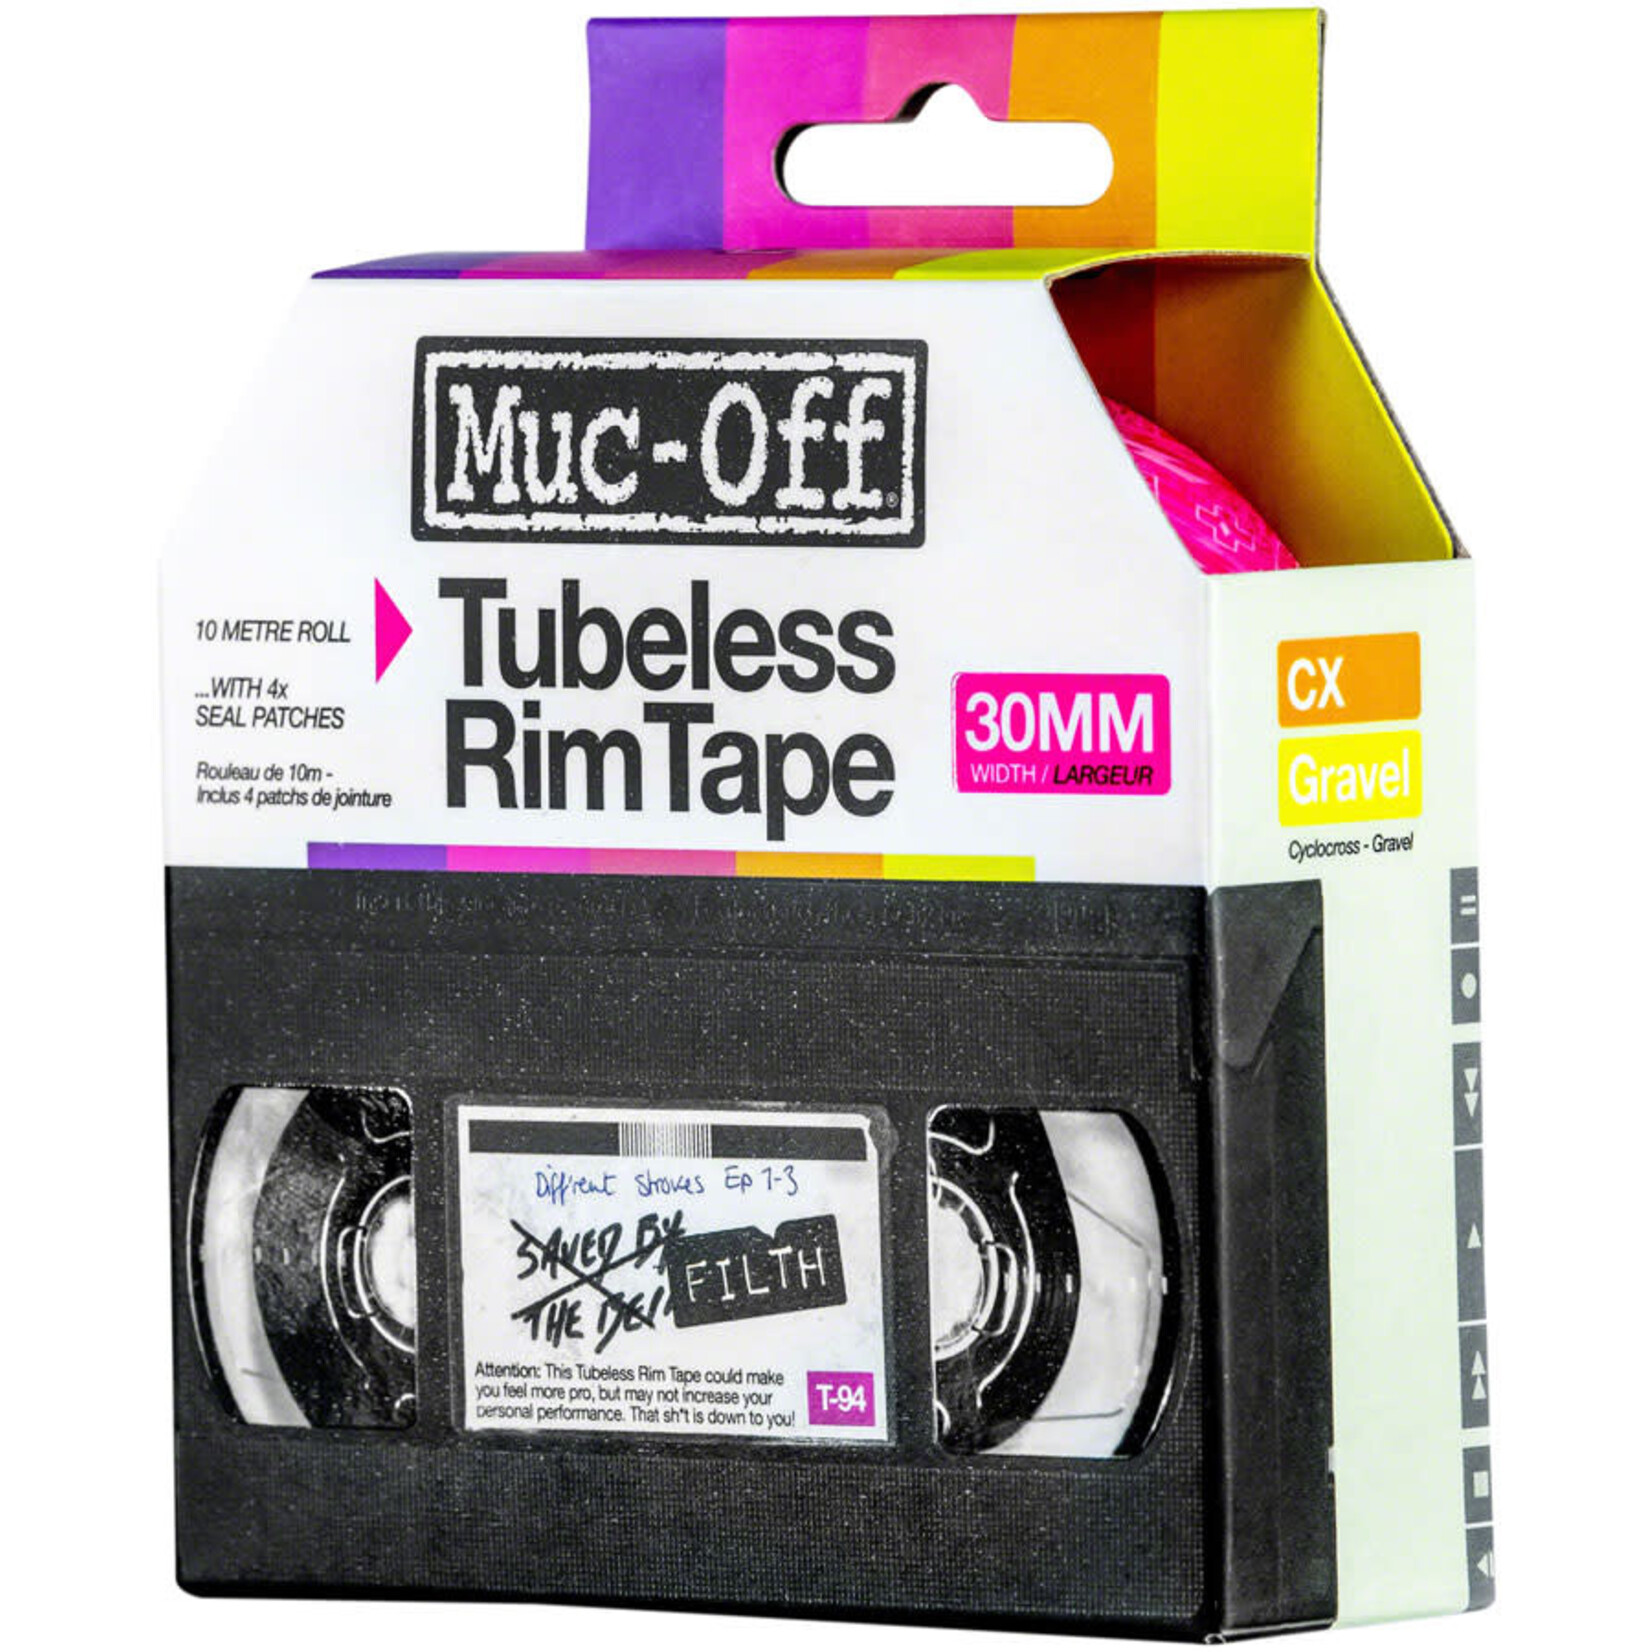 Muc-Off Tubeless Rim Tape, 10m, 30mm